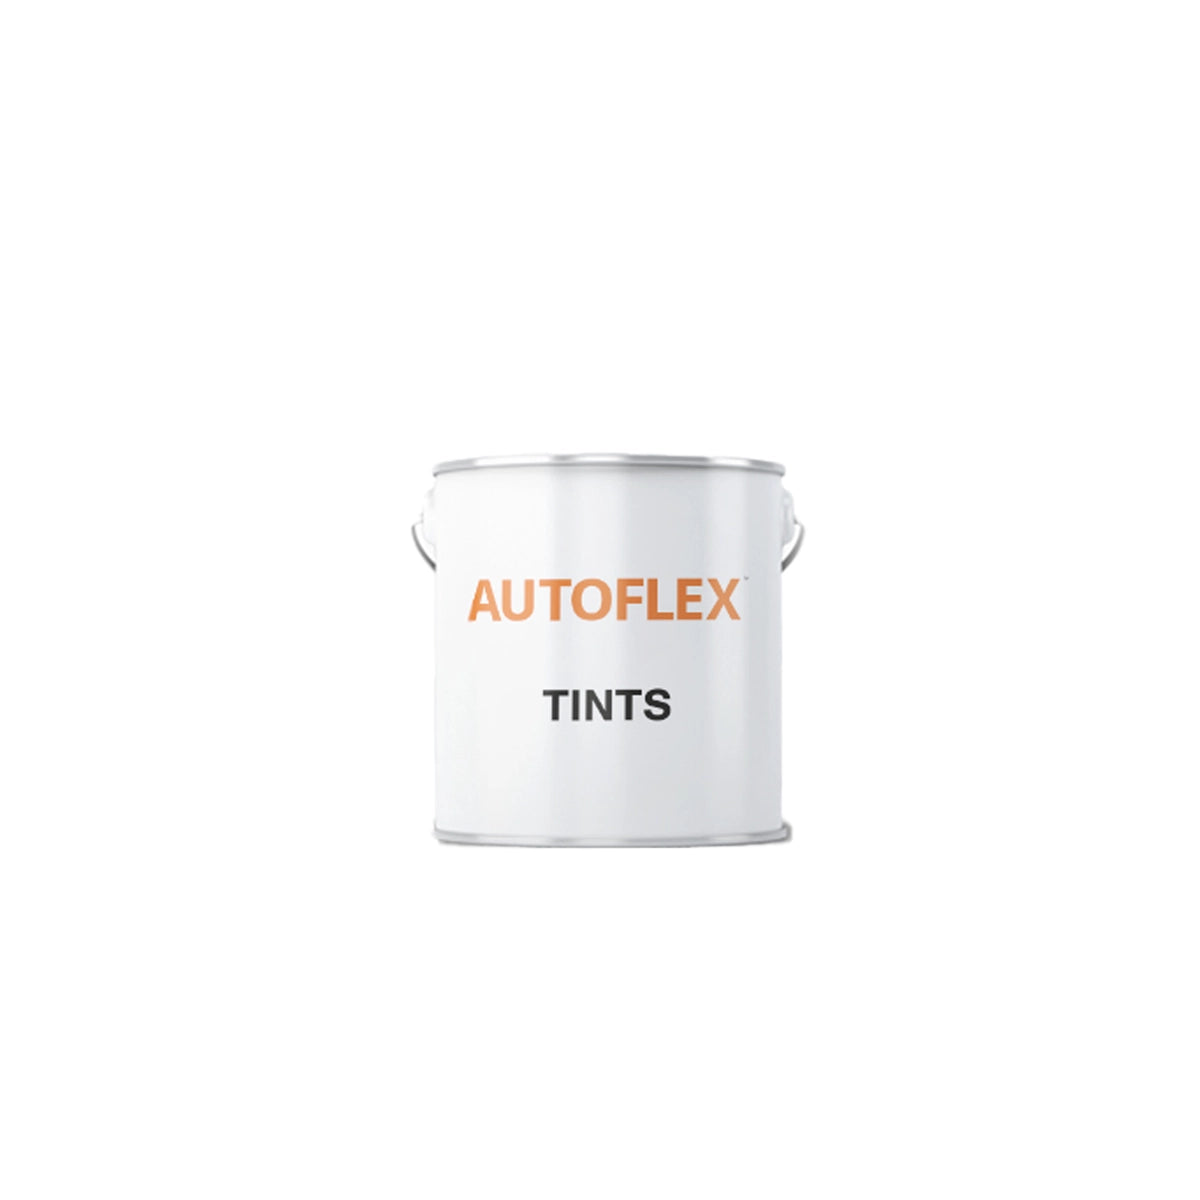 AutoFlex Tints